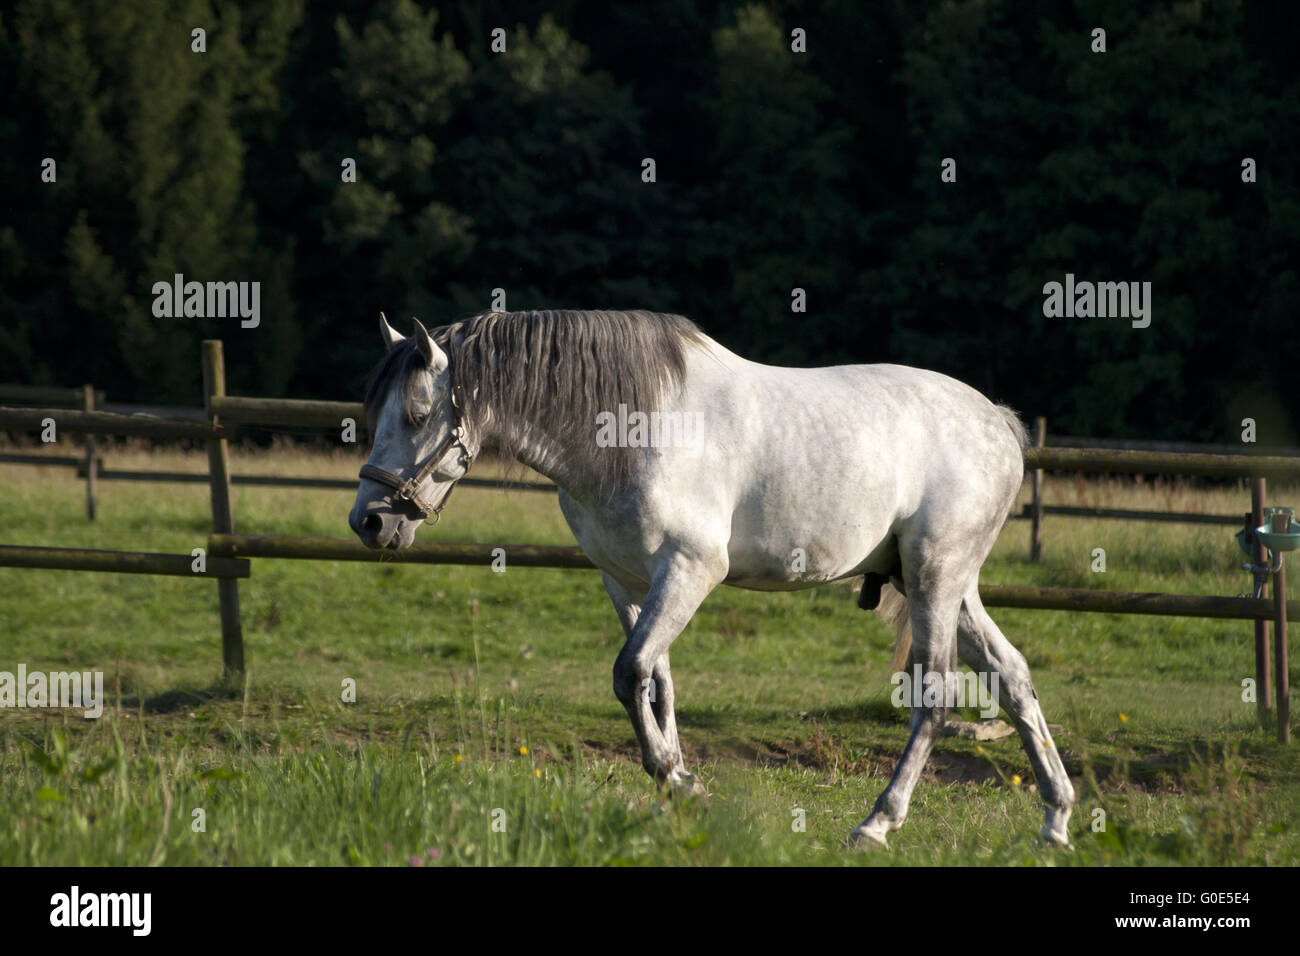 White Horse on field run free Stock Photo